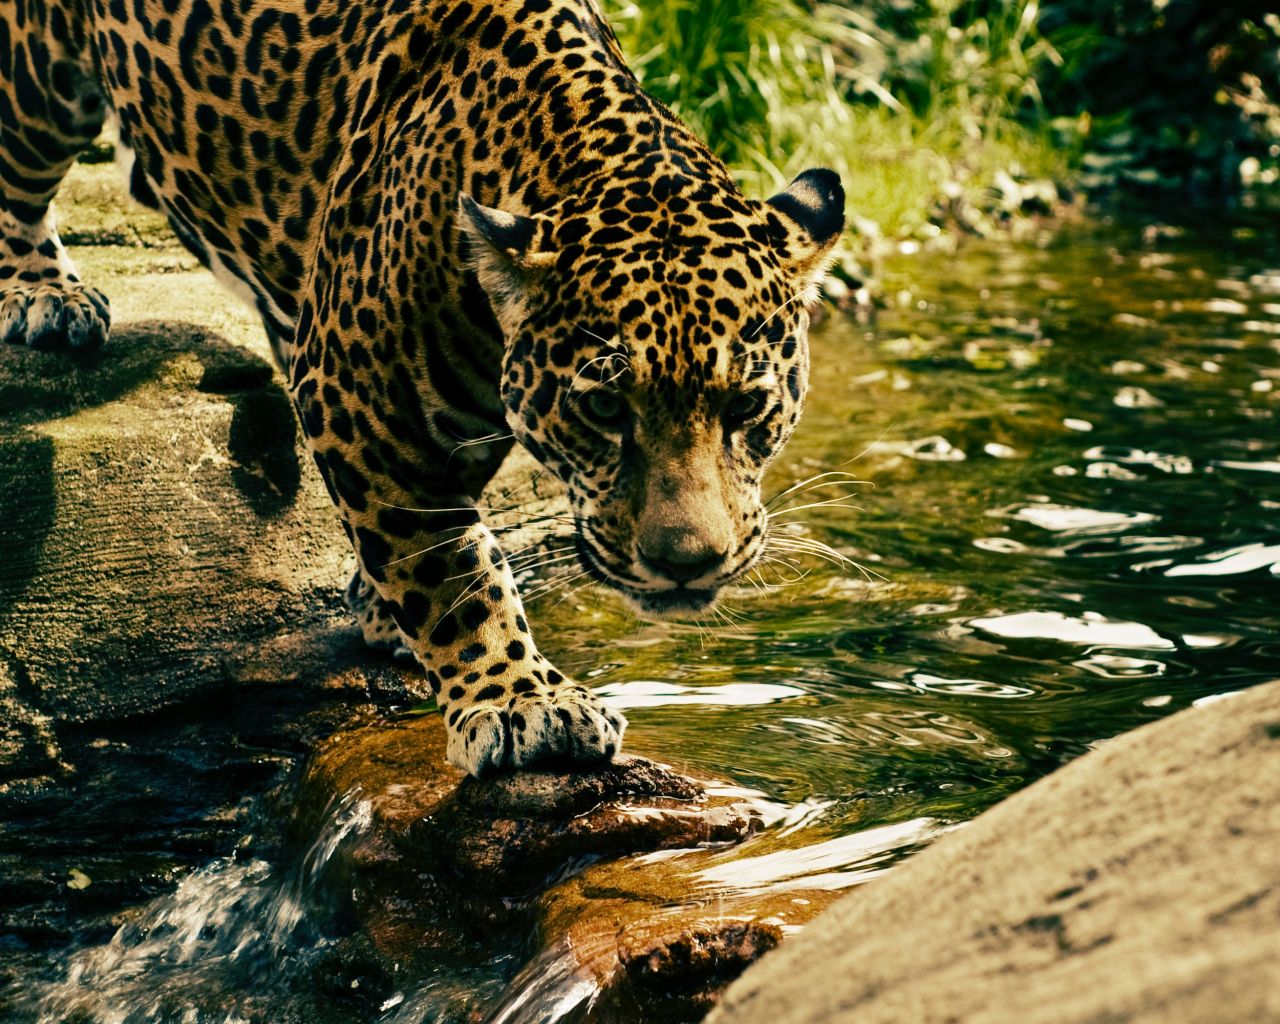 Download 1280x1024 wallpaper predator, jungle, wild animal, leopard, standard 5: fullscreen, 1280x1024 HD image, background, 585